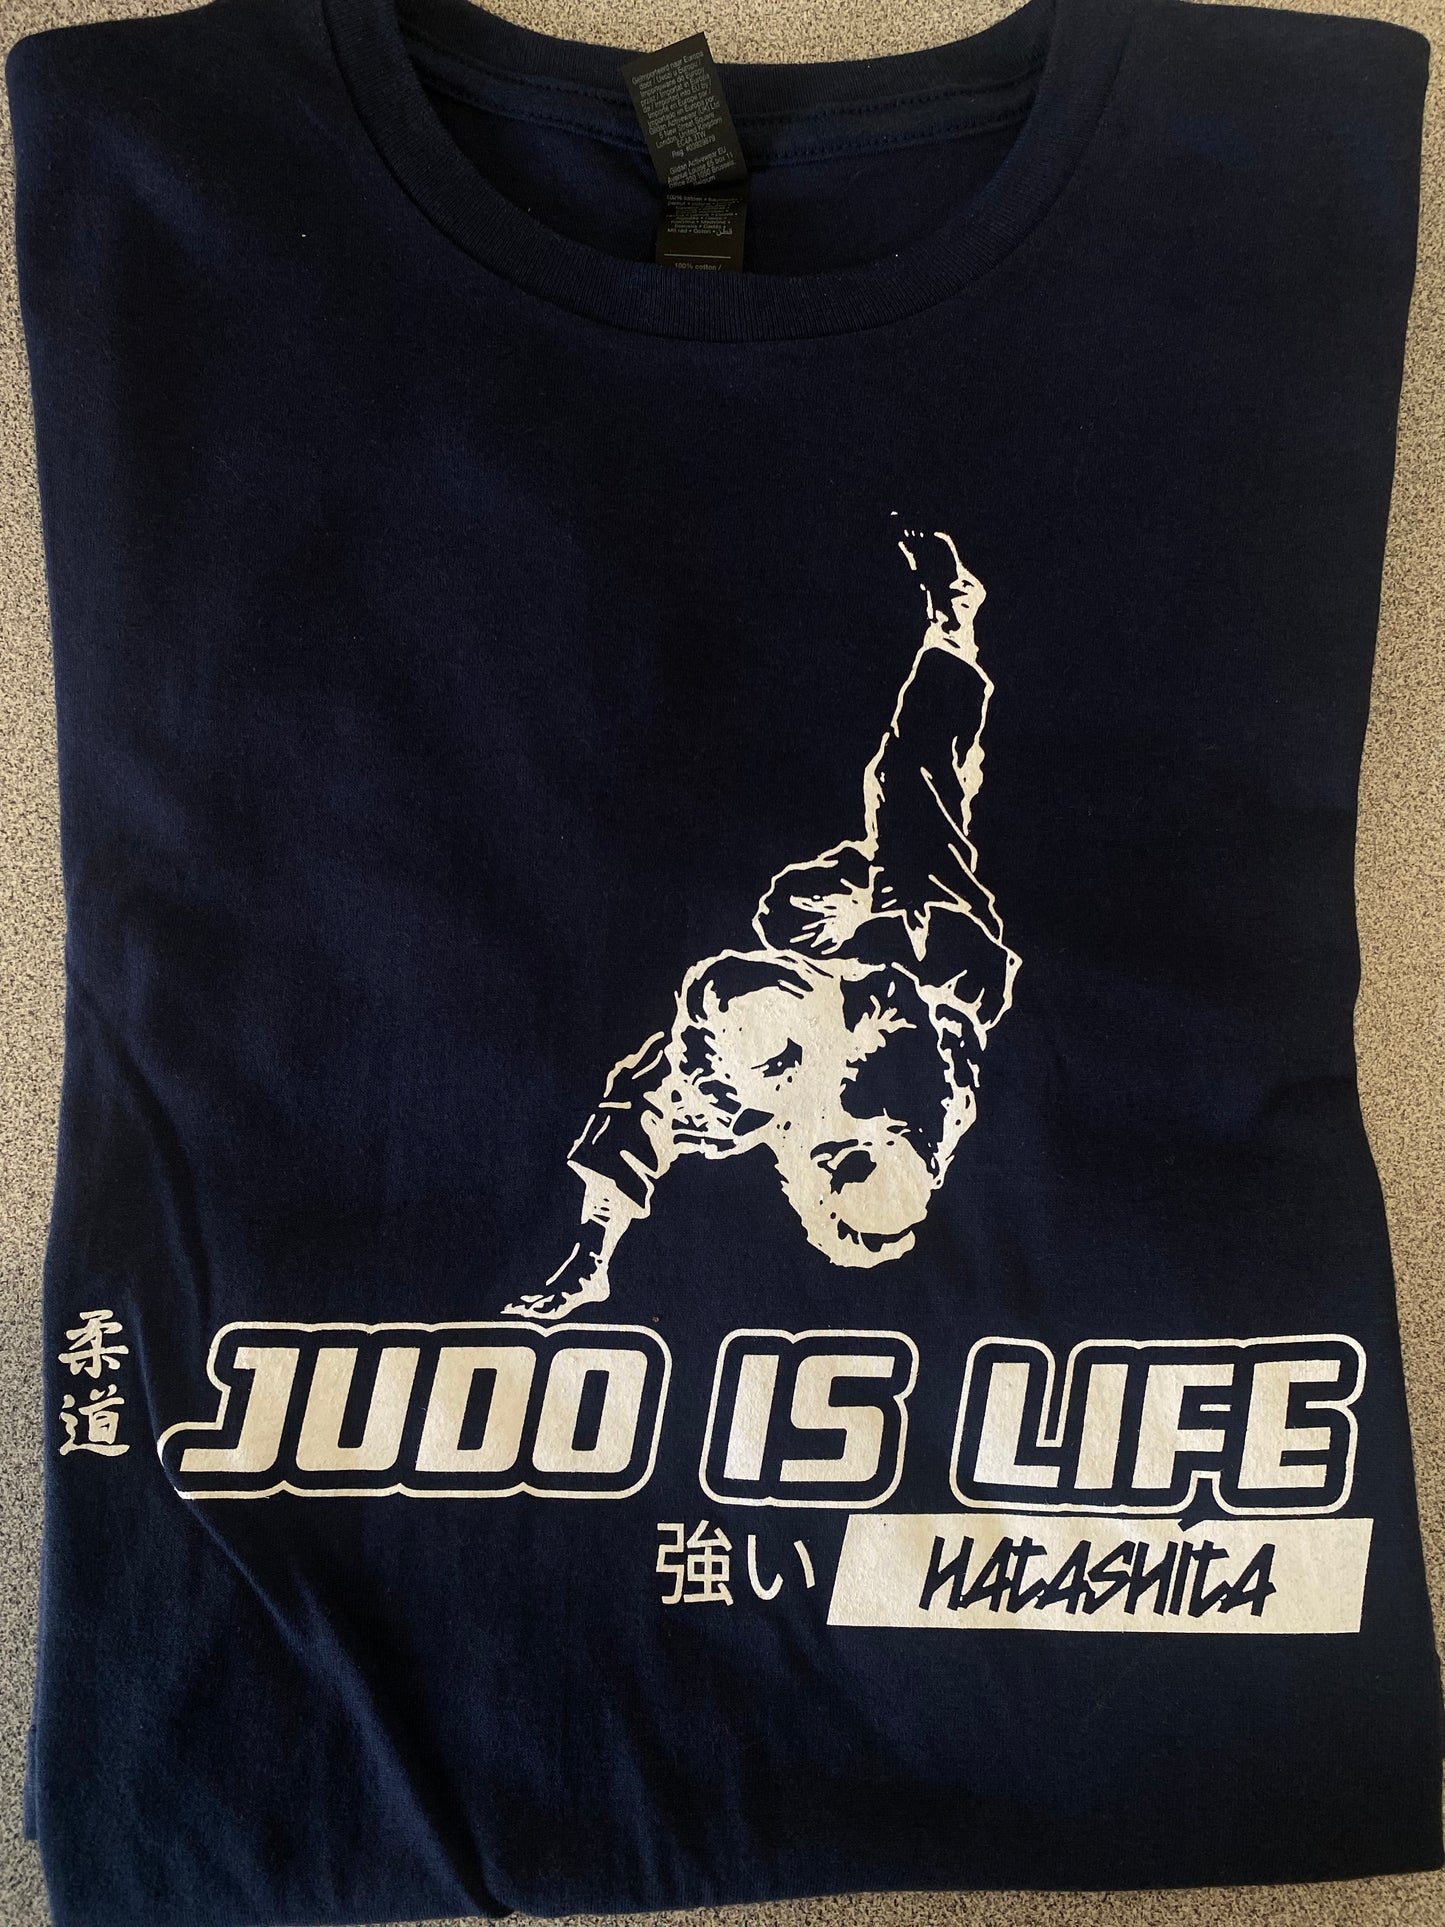 Judo is Life T-Shirt